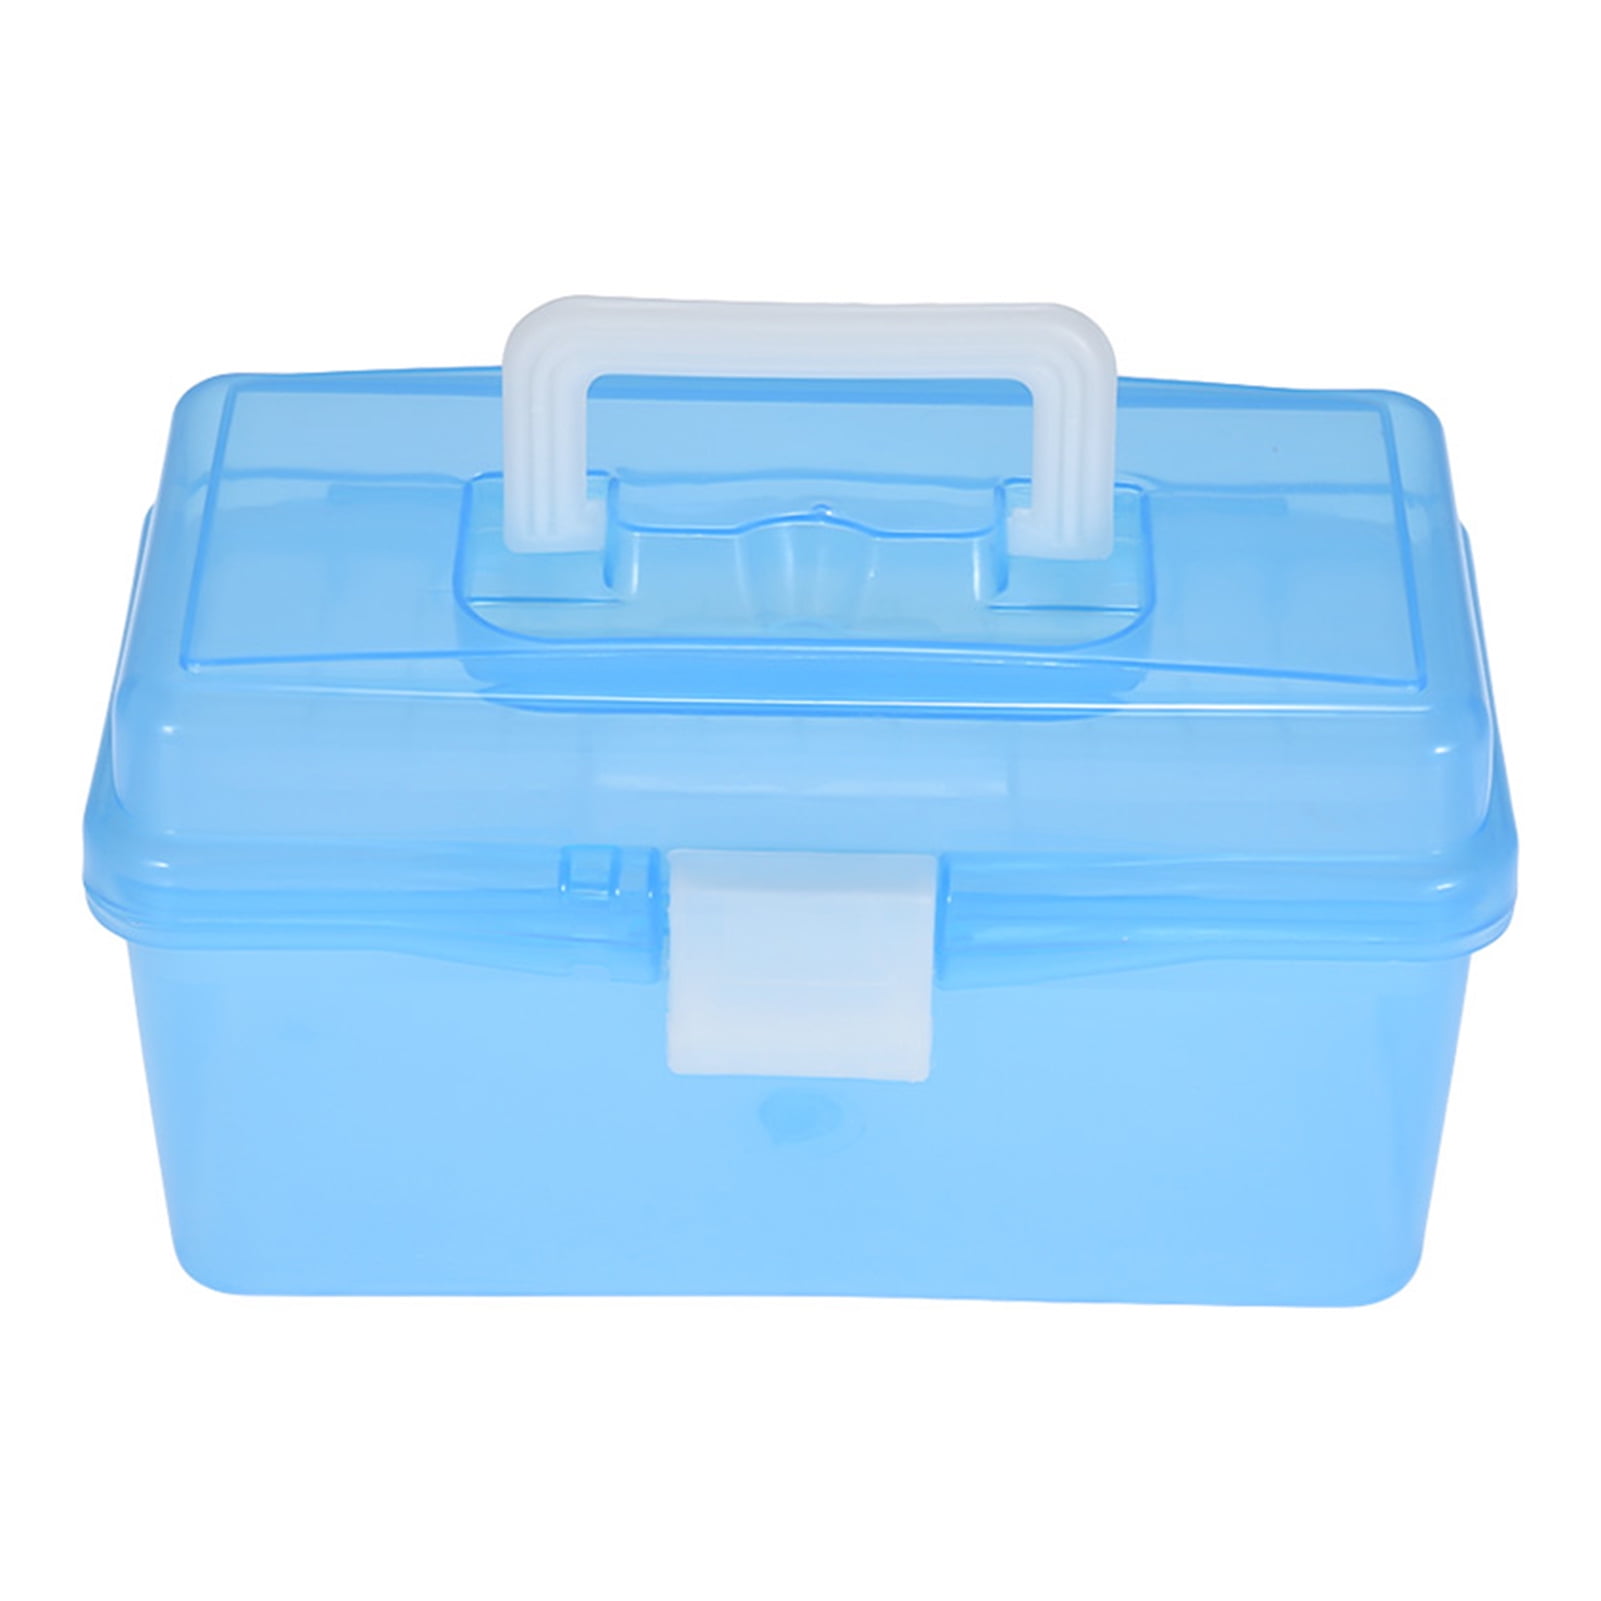 Essential 12.4x6.7x5.7inch Art Supply Craft Storage Tool Box, Semi-clear  With 3 Trays Pink